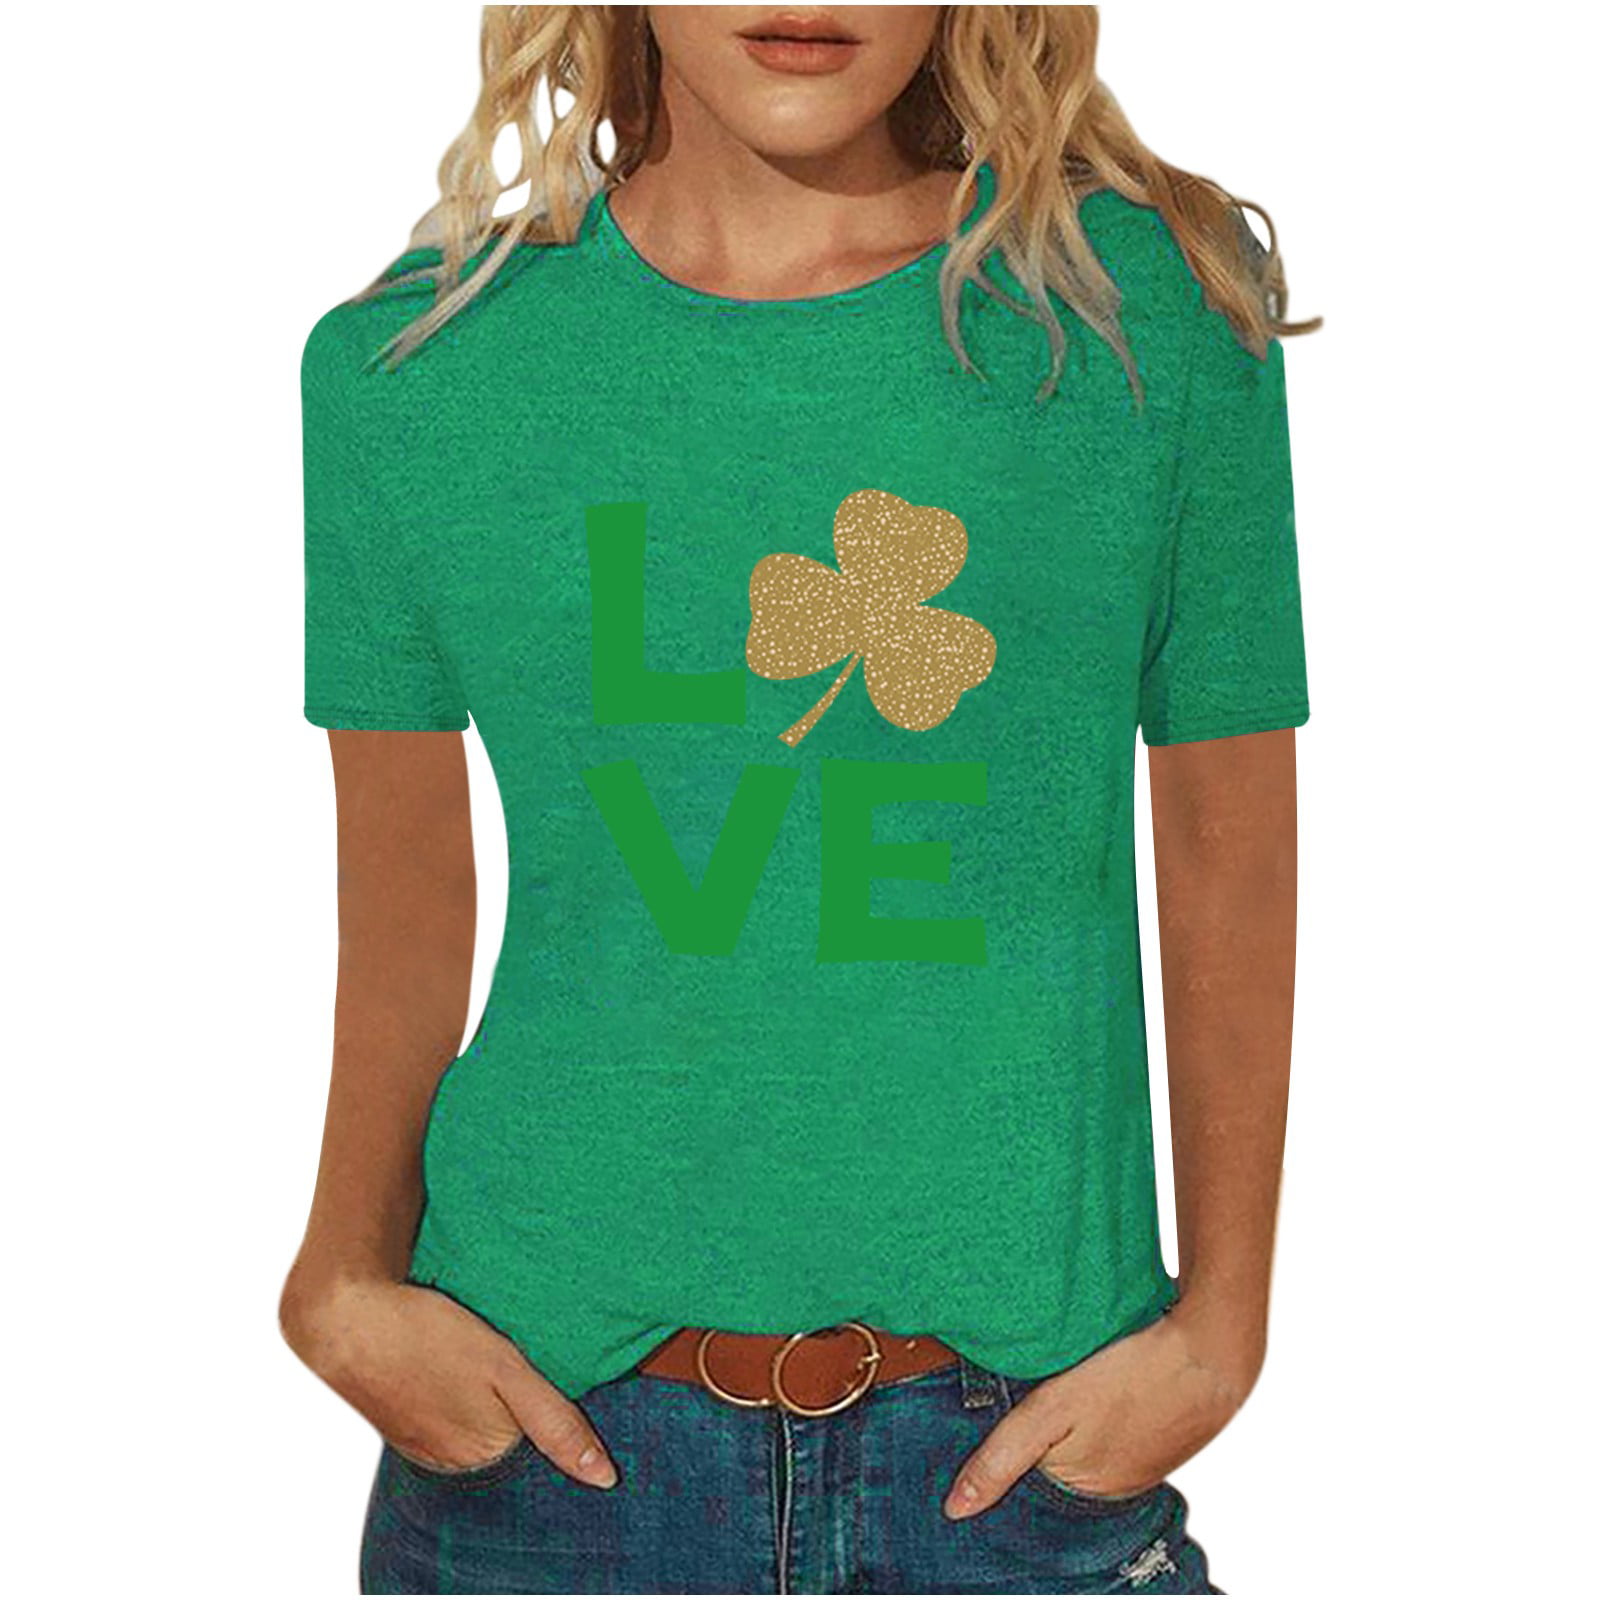 Tee Shirt for Women Green Printed Cute Crewneck Short-Sleeved T Shirts Funny  T-Shirt 